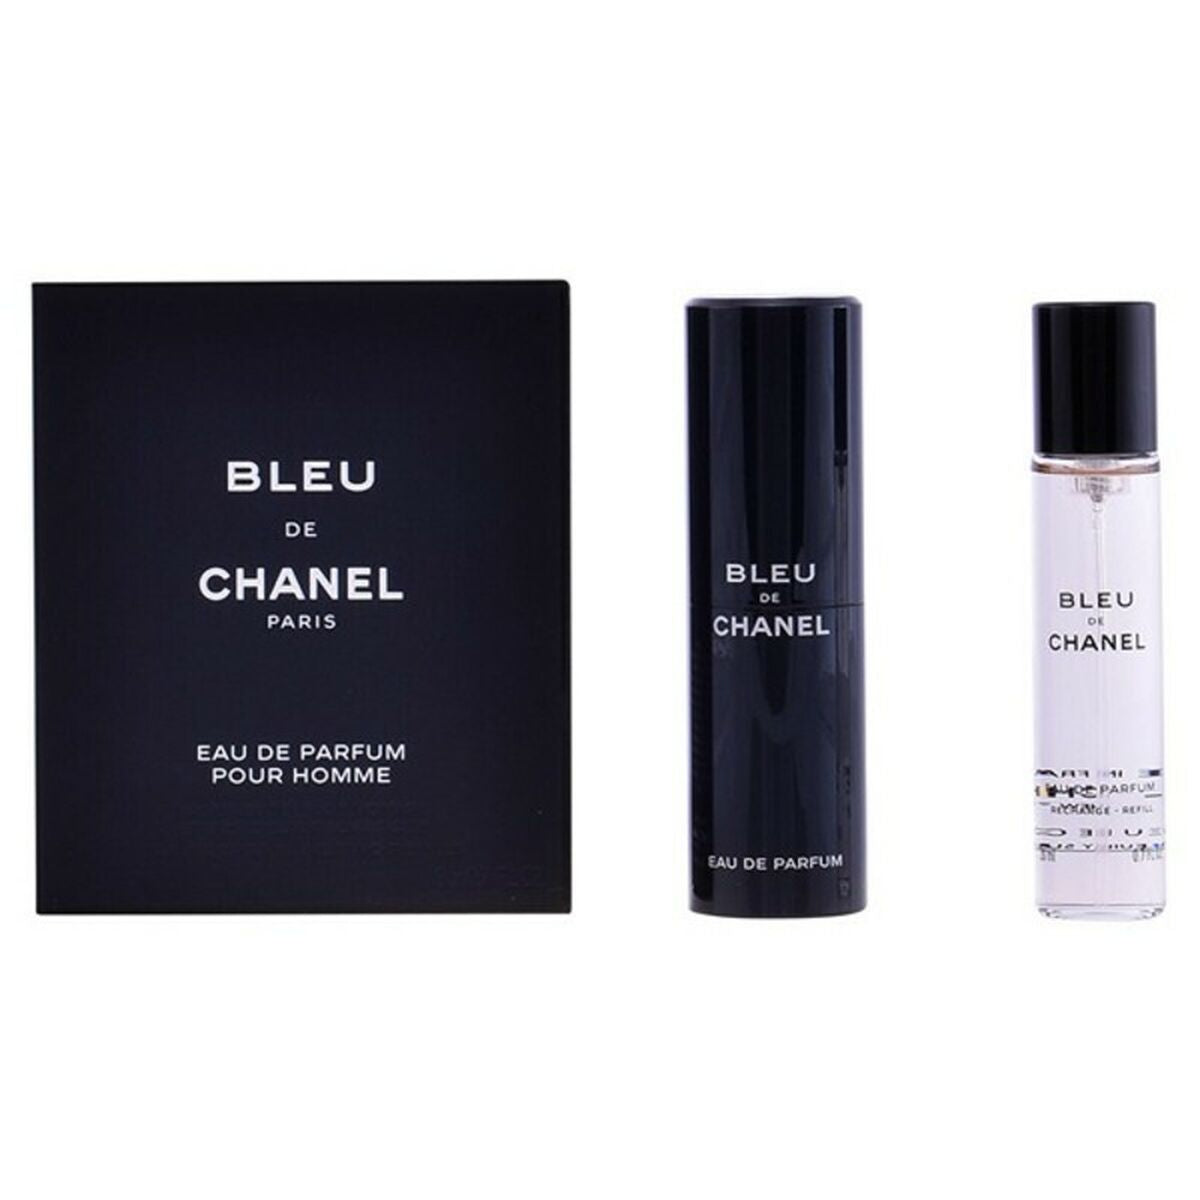 Kaufe Set mit Bleu Chanel 107300 3 Stk. EDP 20 ml - Herren bei AWK Flagship um € 143.00